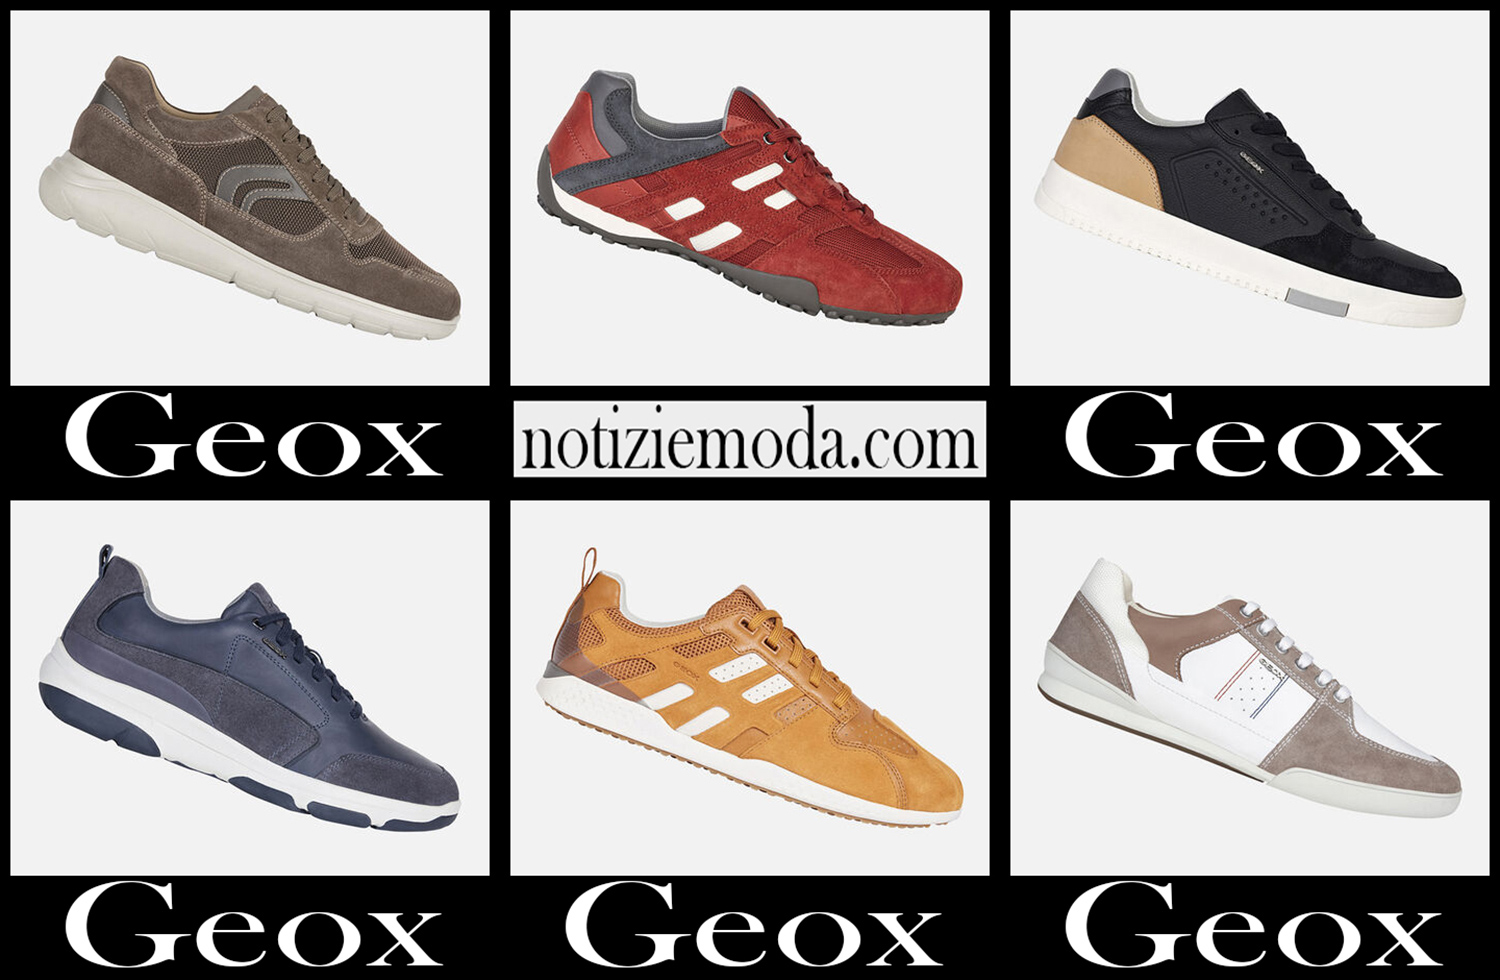 Nuovi arrivi sneakers Geox 2021 calzature moda uomo